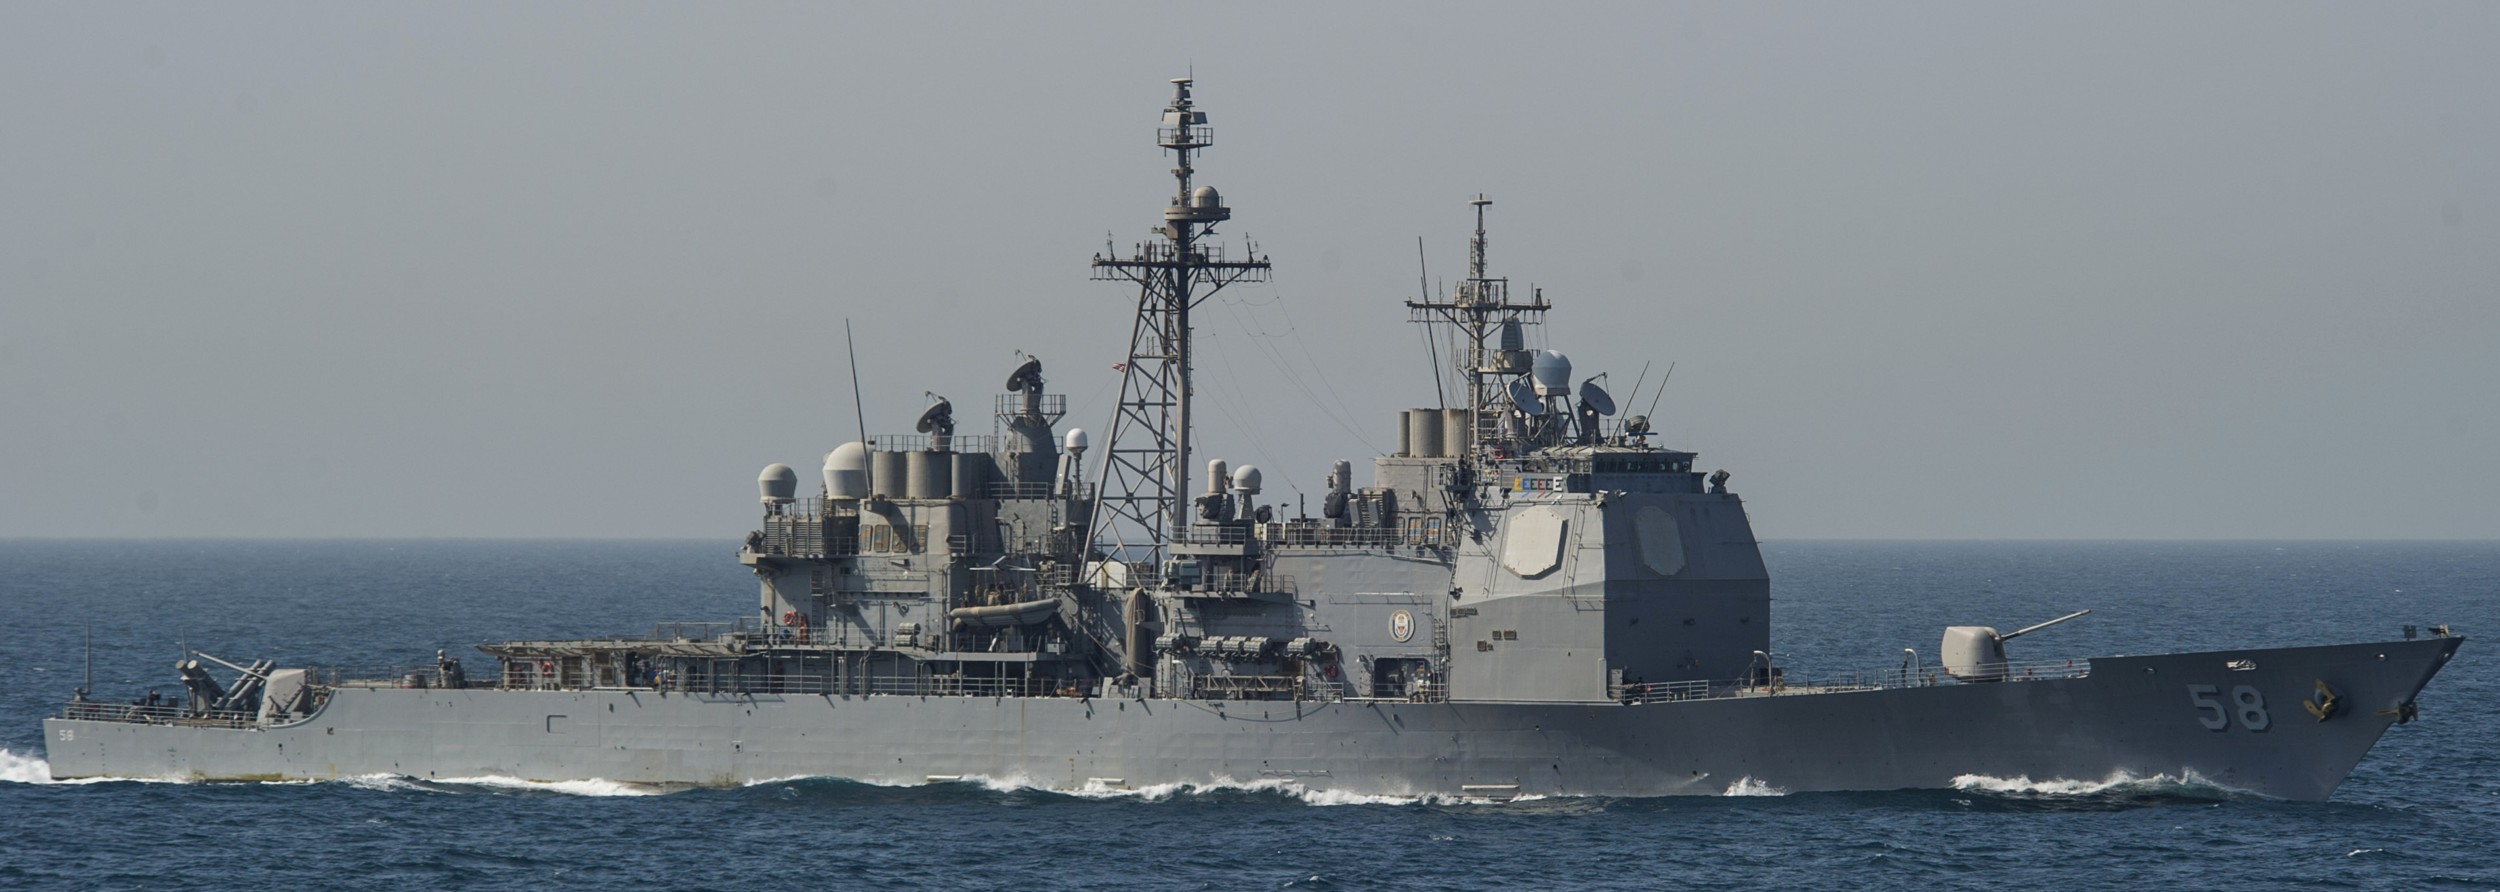 cg-58 uss philippine sea ticonderoga class guided missile cruiser aegis us navy arabian gulf 42